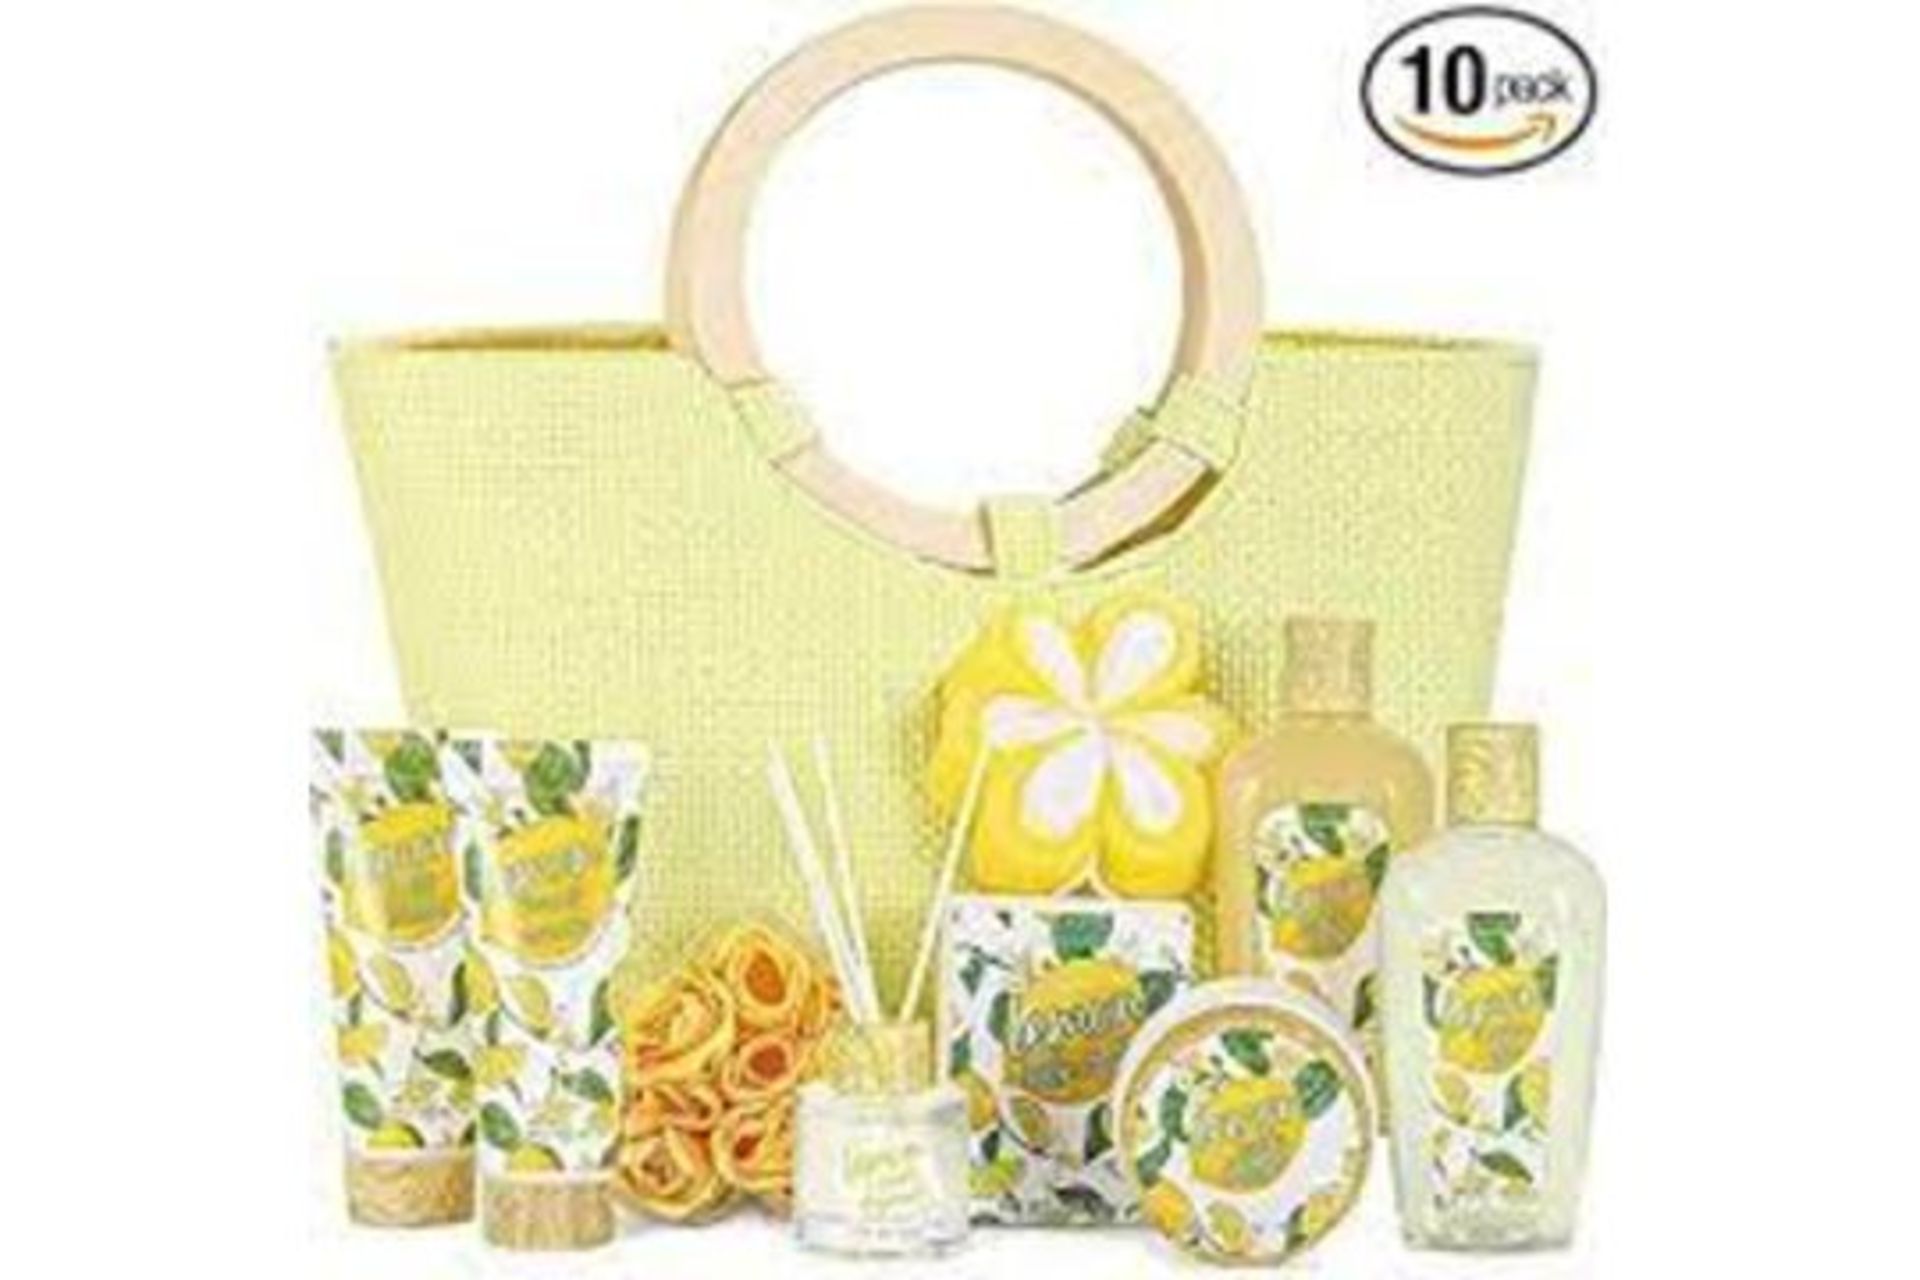 4 X NEW PACKAGED Lemon Everyday Bath Set Tote Gift Sets. (SKU: BEL-SC-03). Home Spa Kit Meets Your